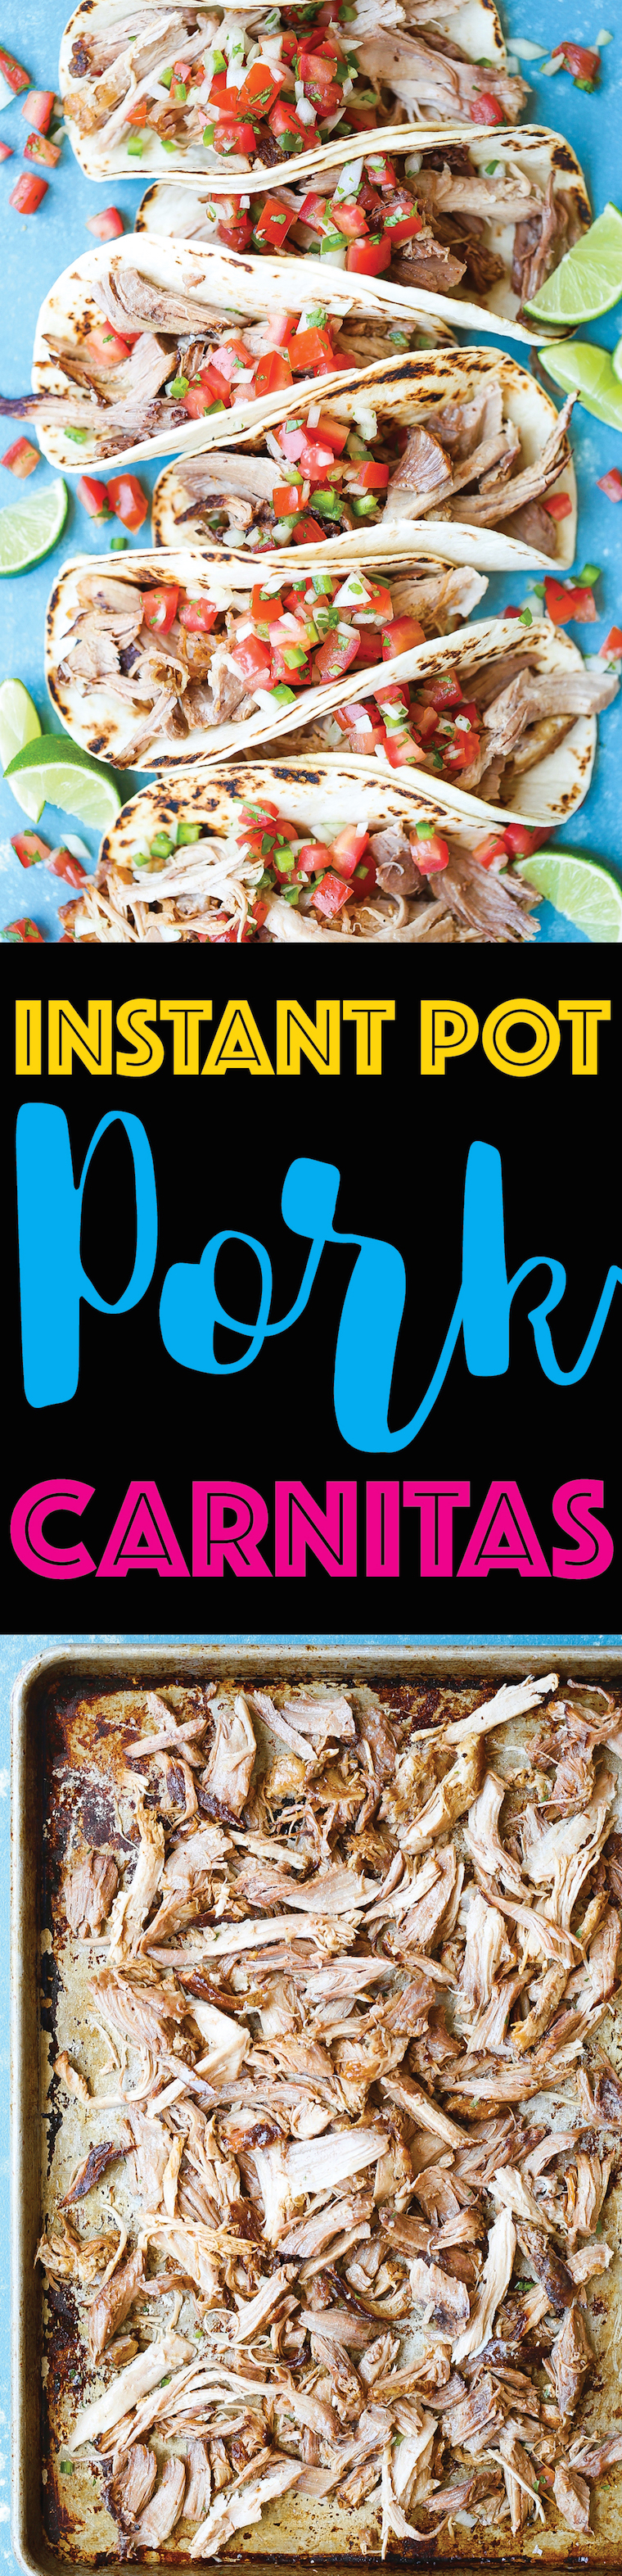 https://s23209.pcdn.co/wp-content/uploads/2018/09/Instant-Pot-Pork-Carnitas.jpg